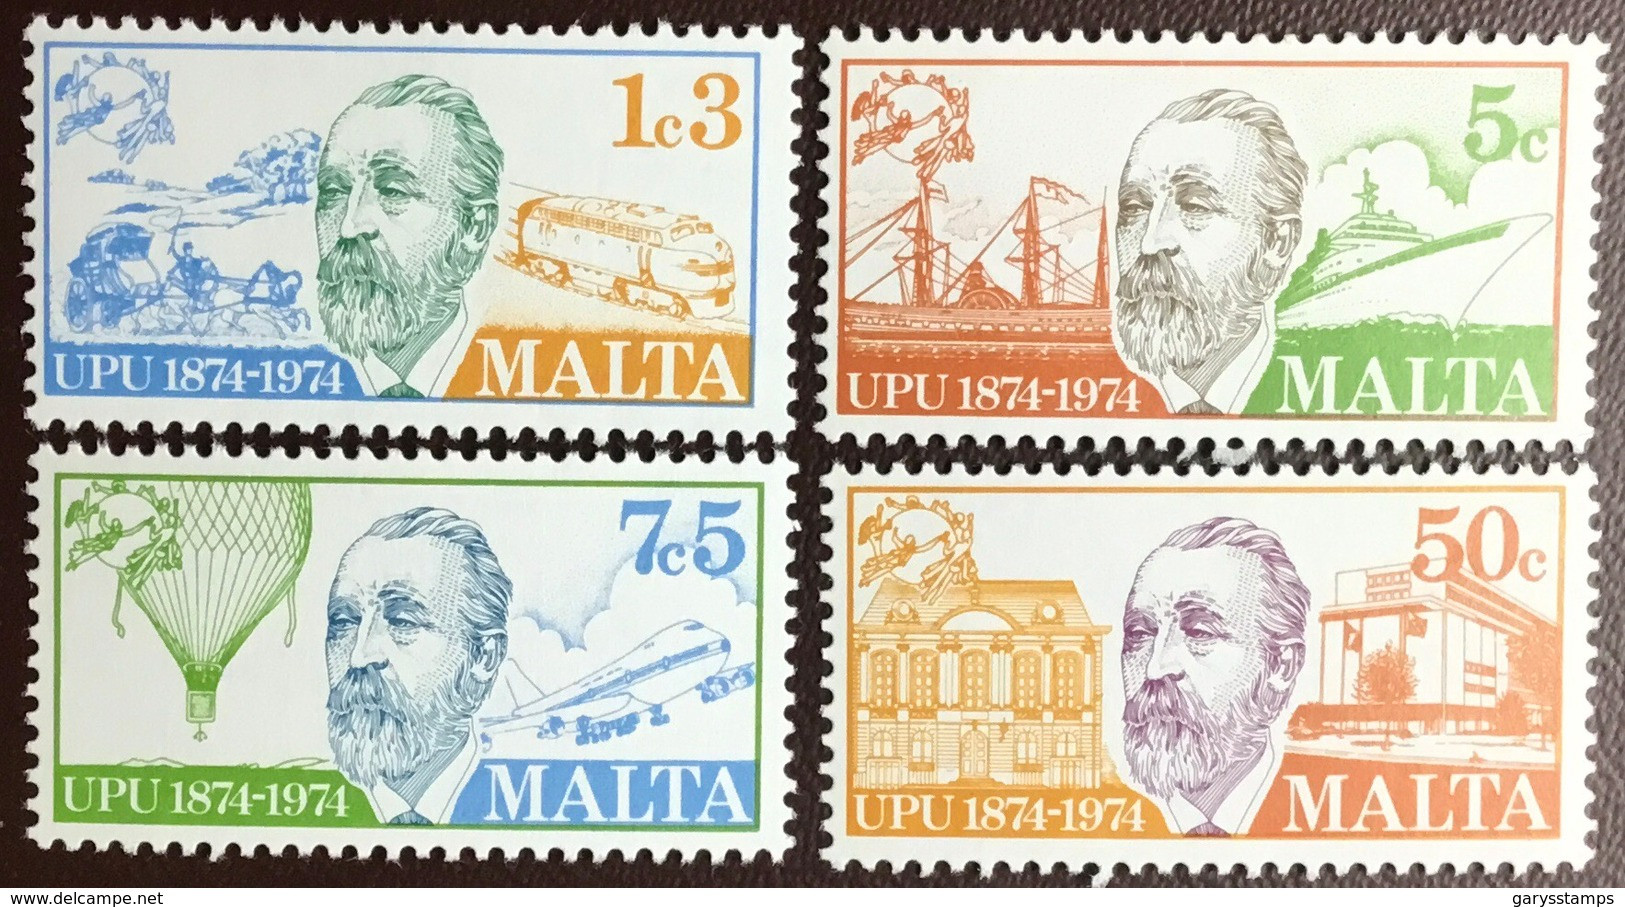 Malta 1974 UPU MNH - Malta